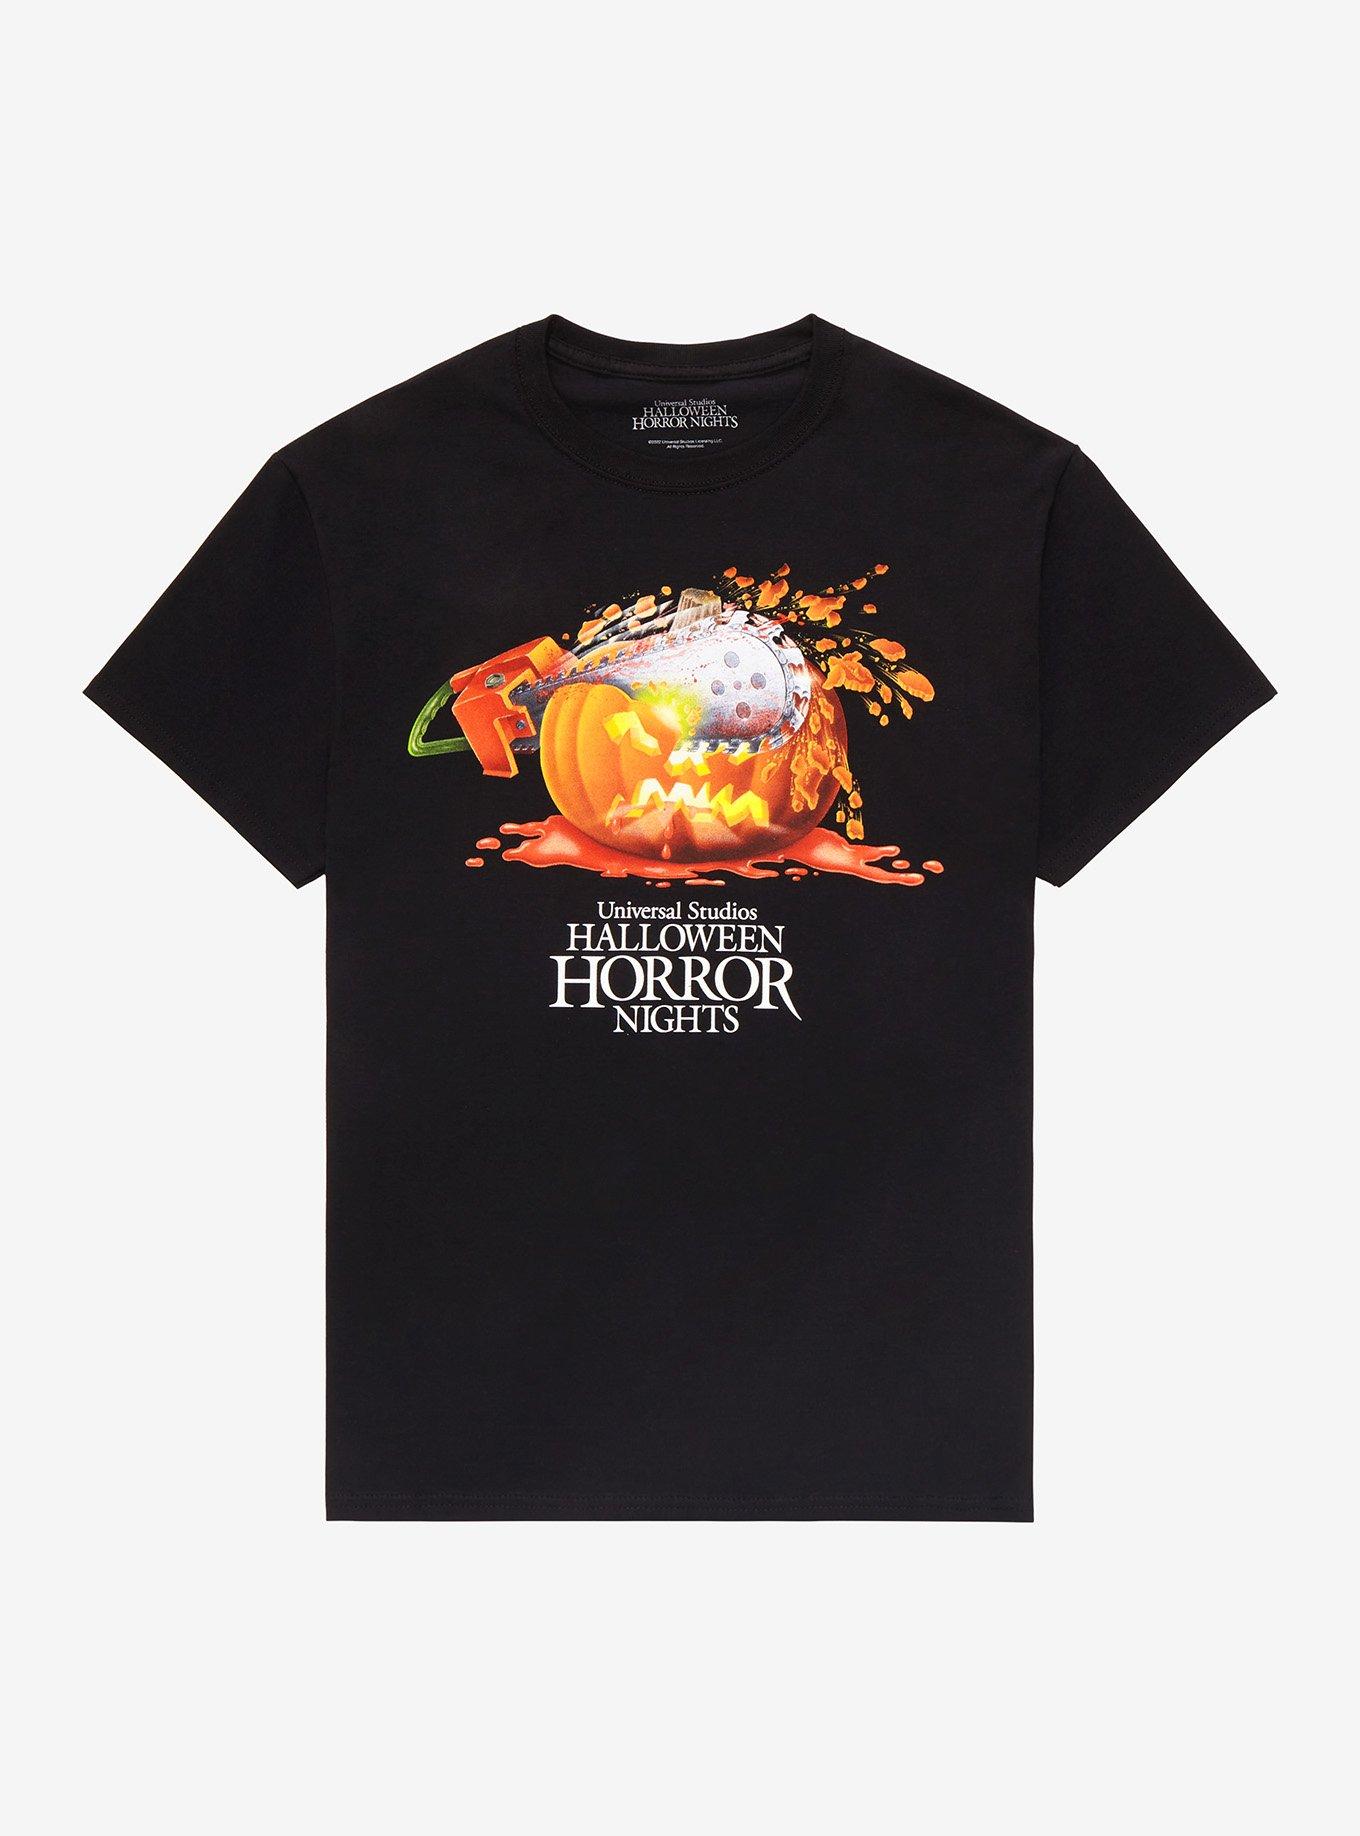 Universal Studios Halloween Horror Nights Chainsaw Jack-O'-Lantern T-Shirt, BLACK, hi-res